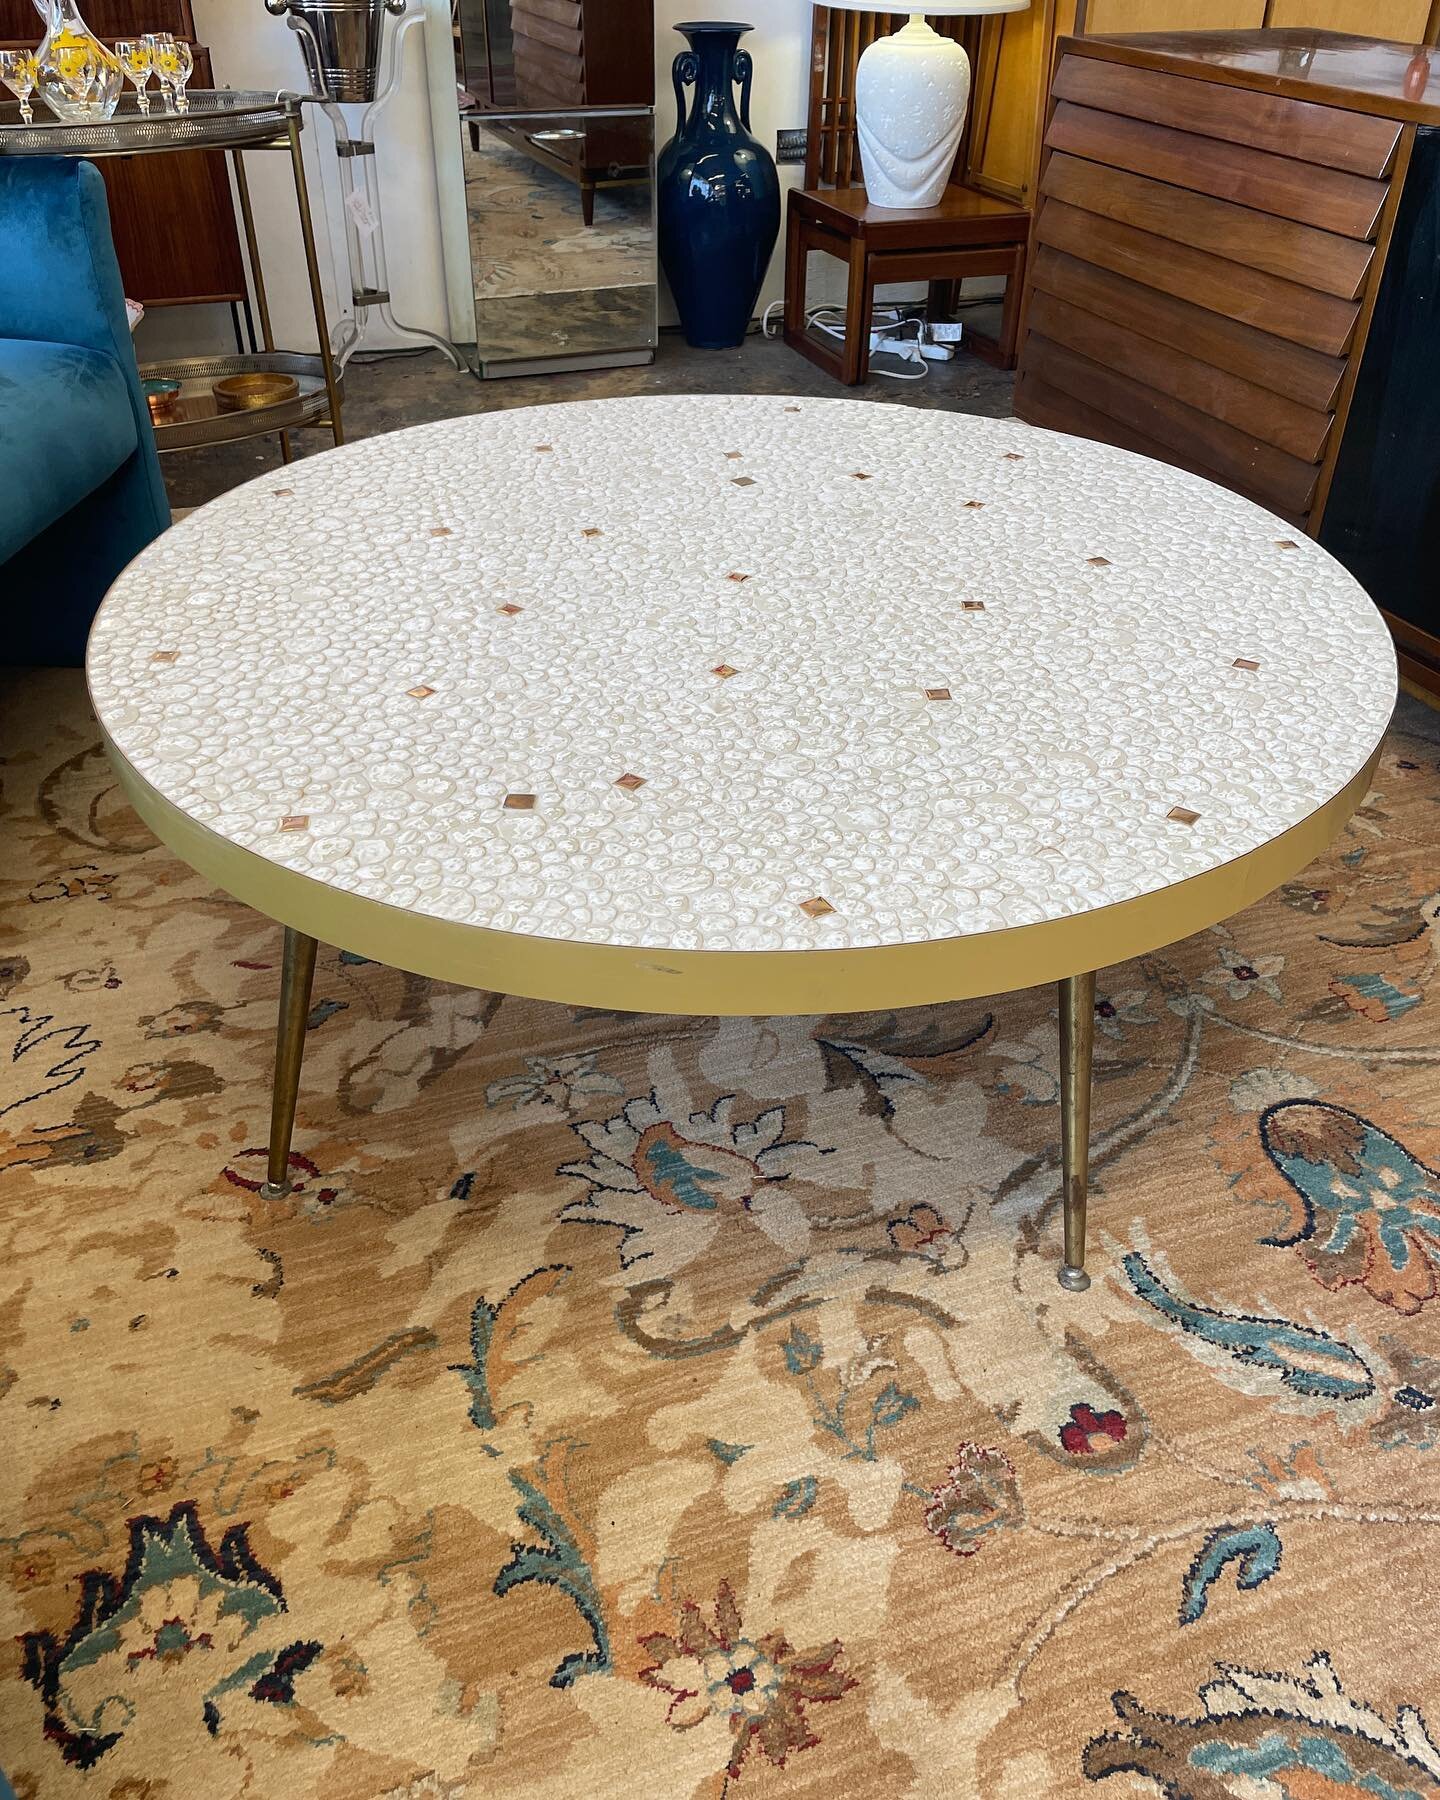 Vintage Round Tile Table. 
(43&rdquo;diam. x 18&rdquo;ht.)